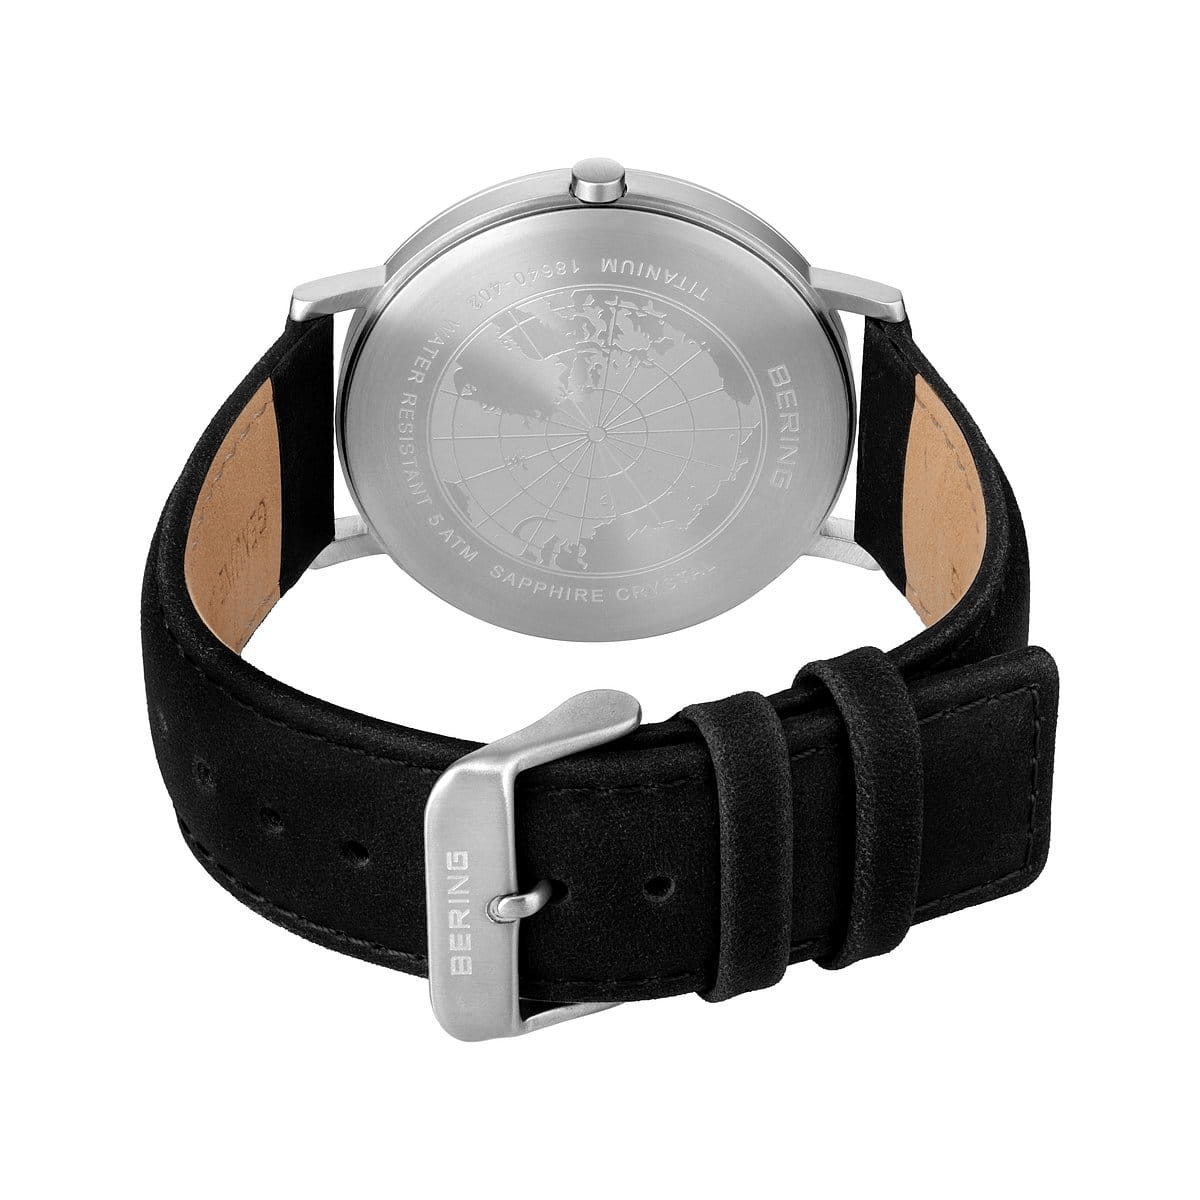 BERING Titanium Brushed Silver 40mm Black Strap Men's Watch 18640-402